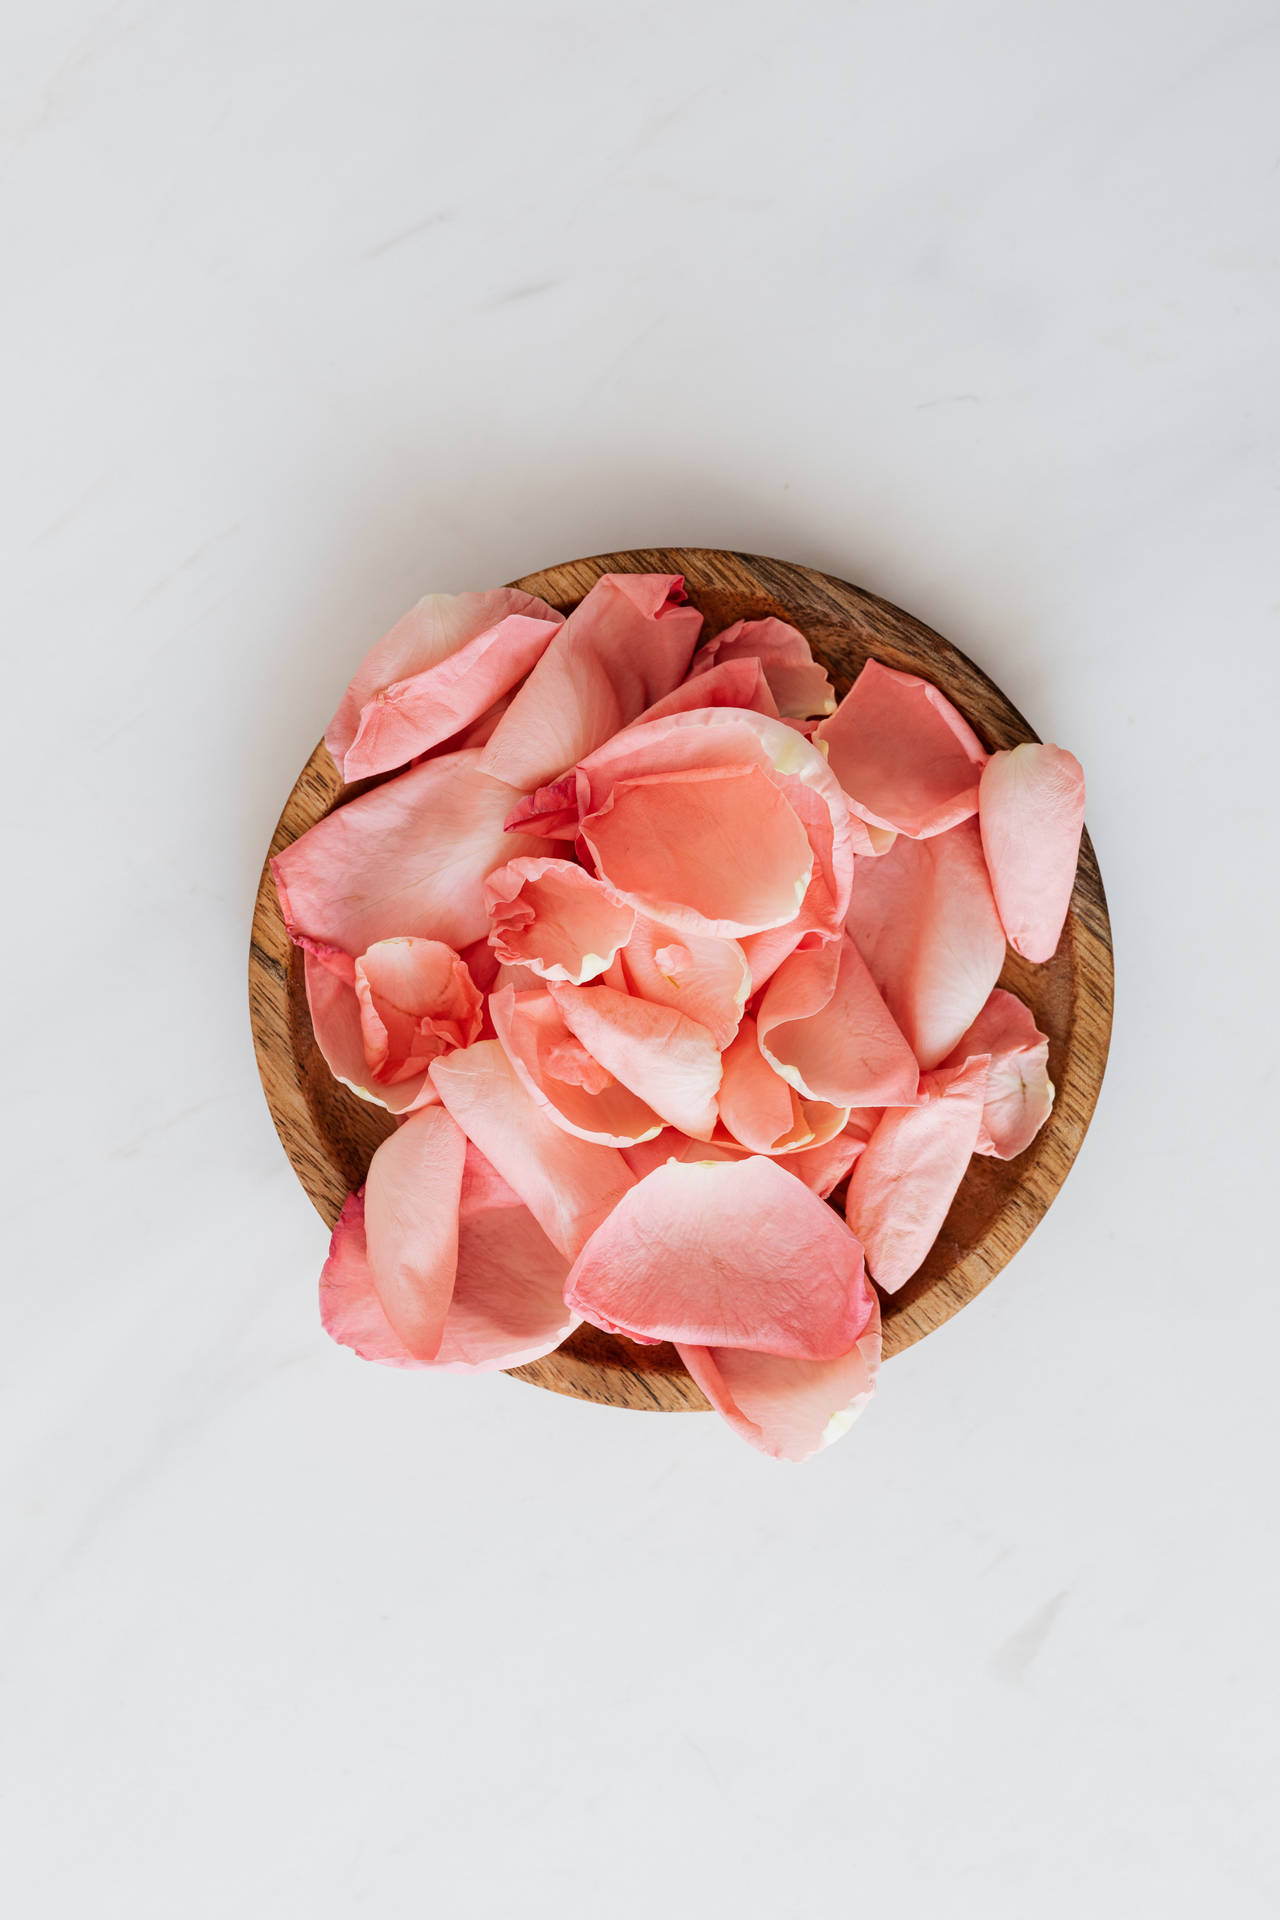 Bowl Of Pink Rose Petals